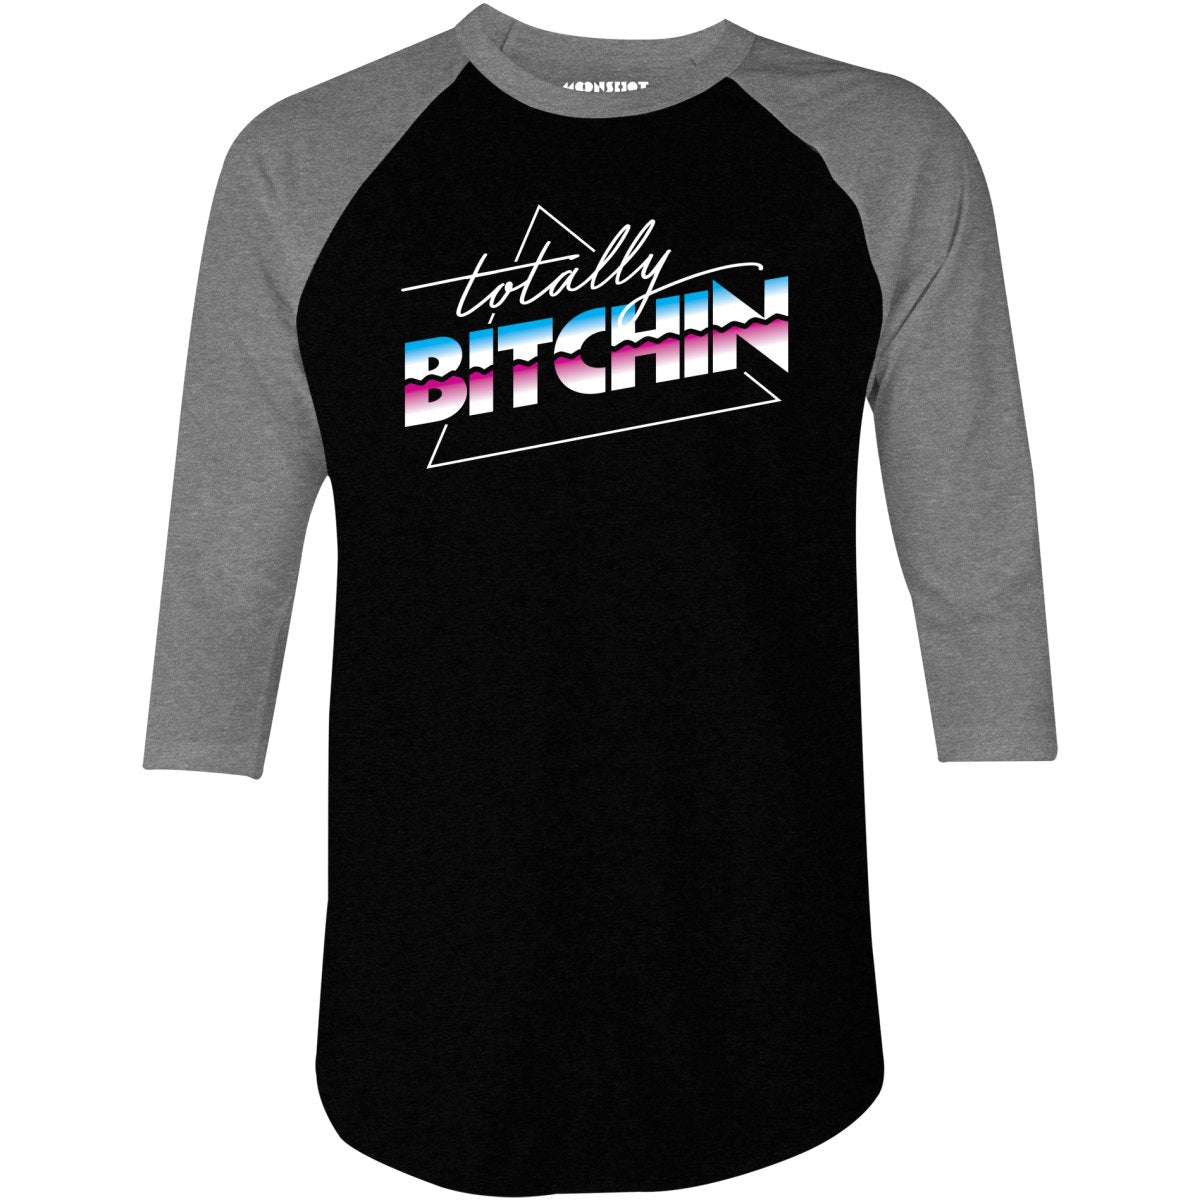 Totally Bitchin - 3/4 Sleeve Raglan T-Shirt